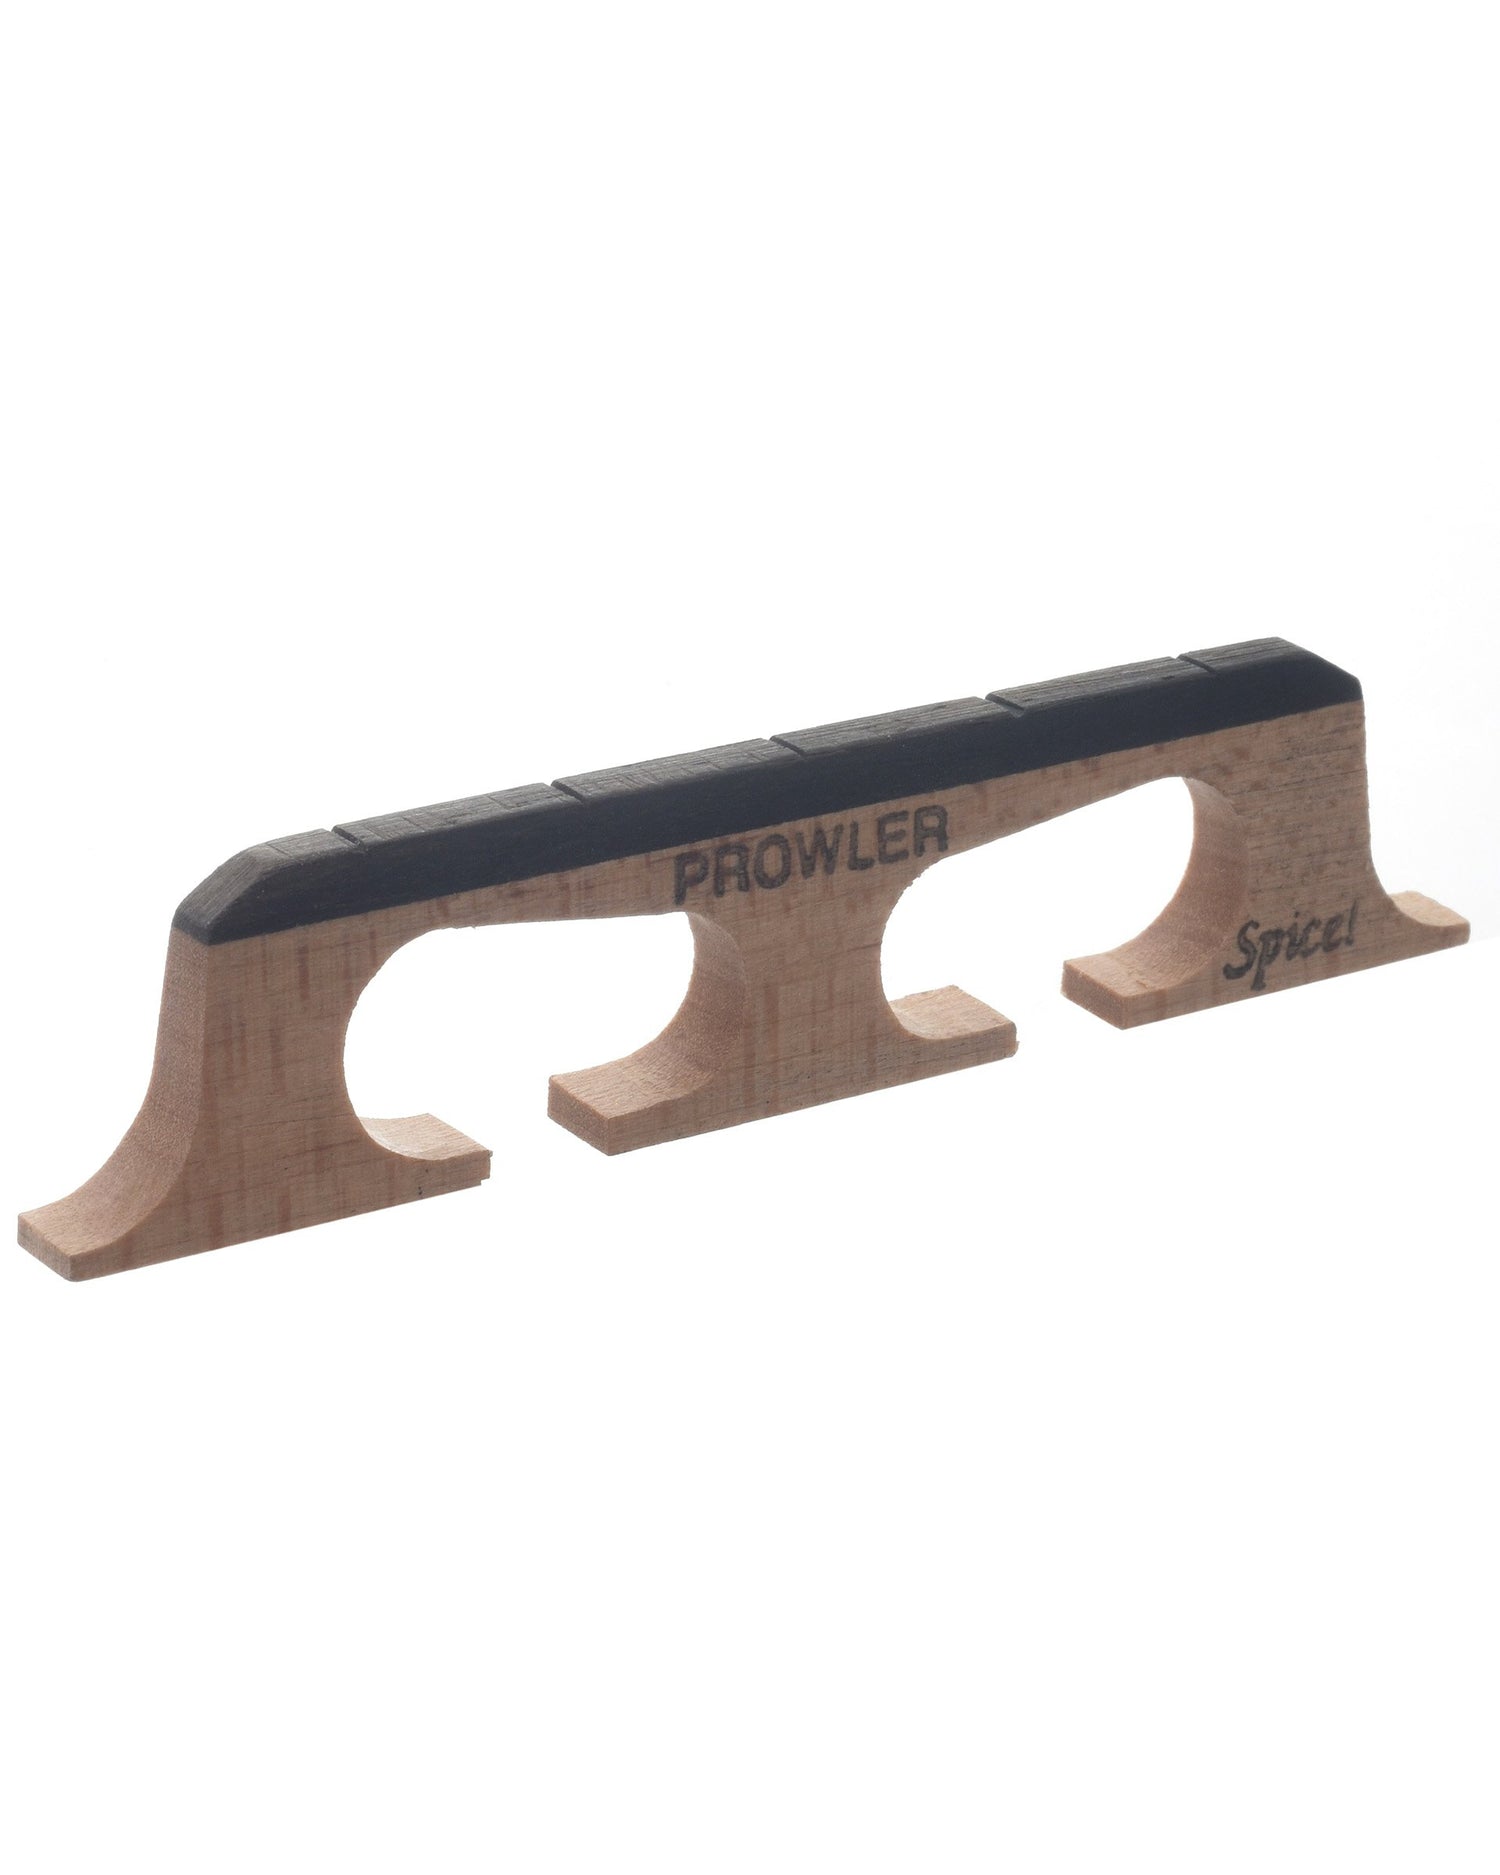 Image 1 of Kat Eyz Prowler Spice Banjo Bridge, 5/8" High, Crowe Spacing - SKU# KEPB-5/8-C : Product Type Accessories & Parts : Elderly Instruments